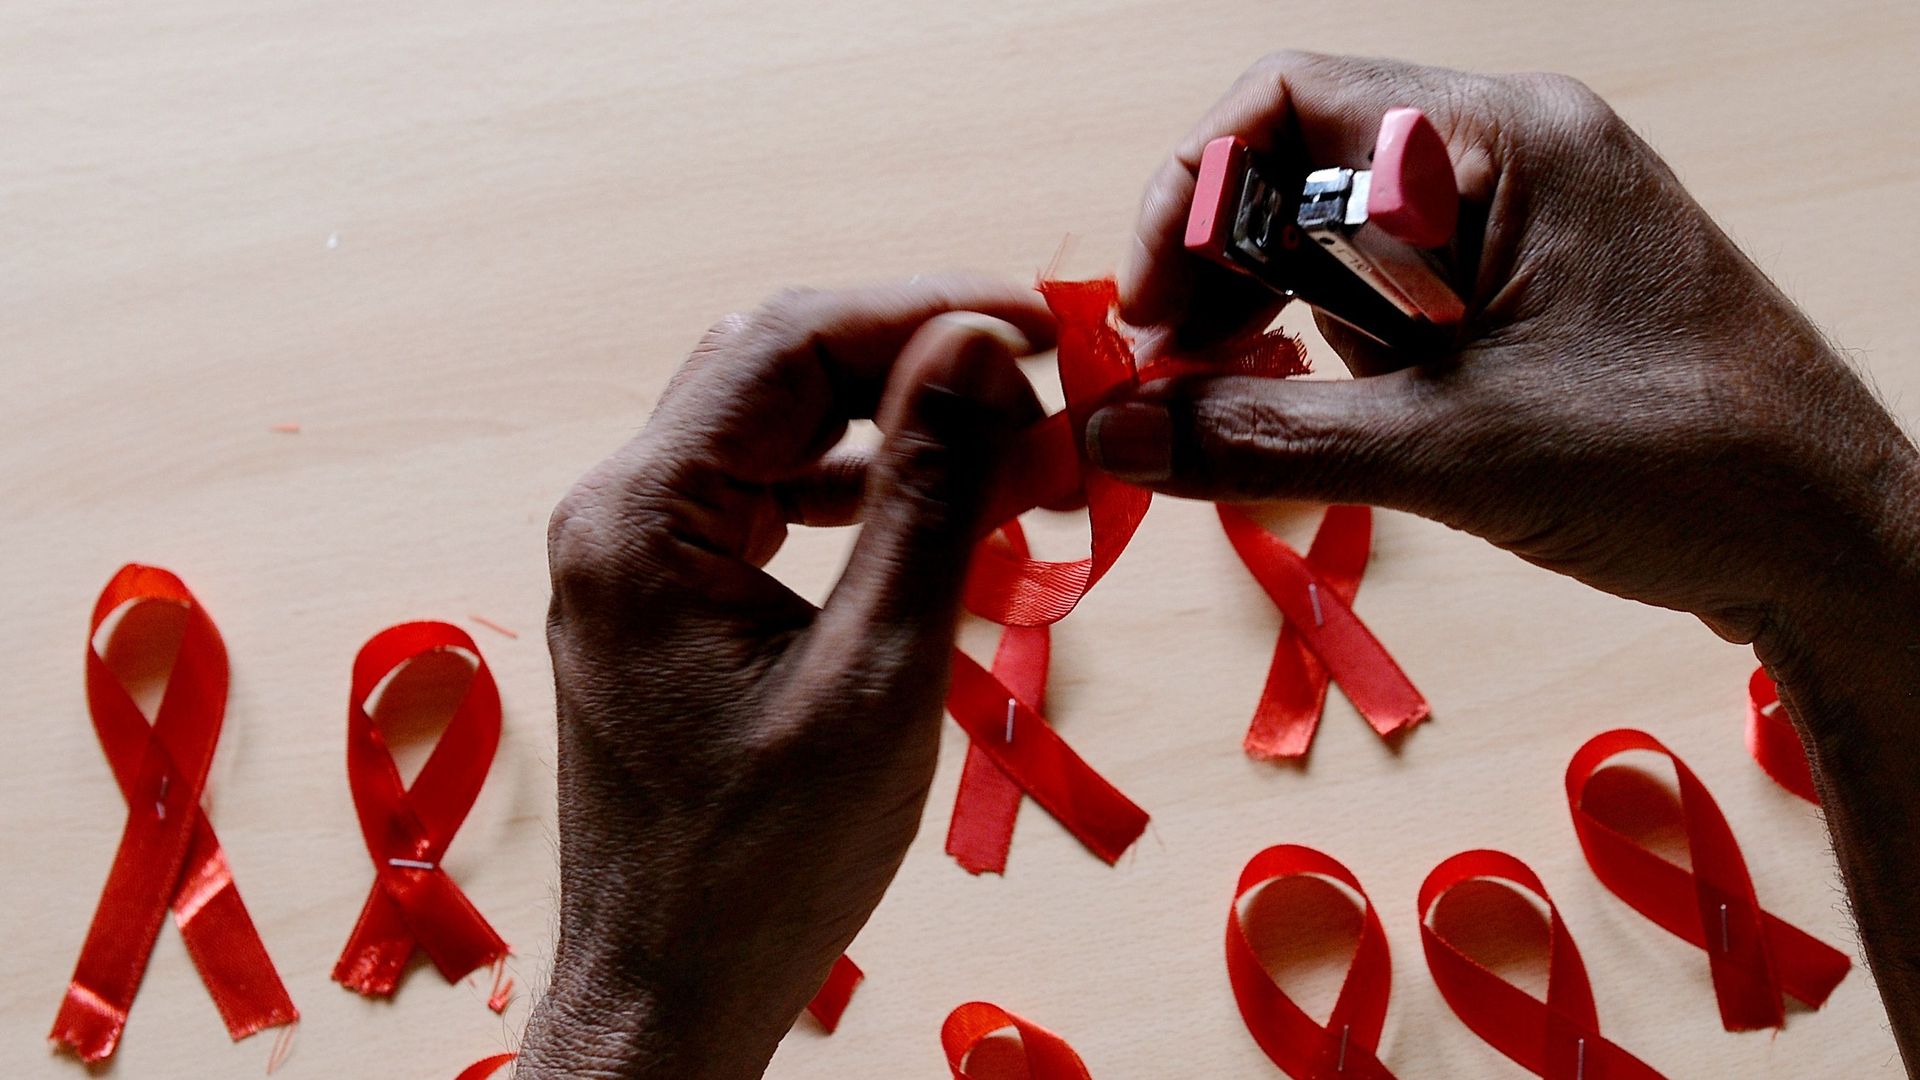 Le ruban symbole de la lutte contre le sida